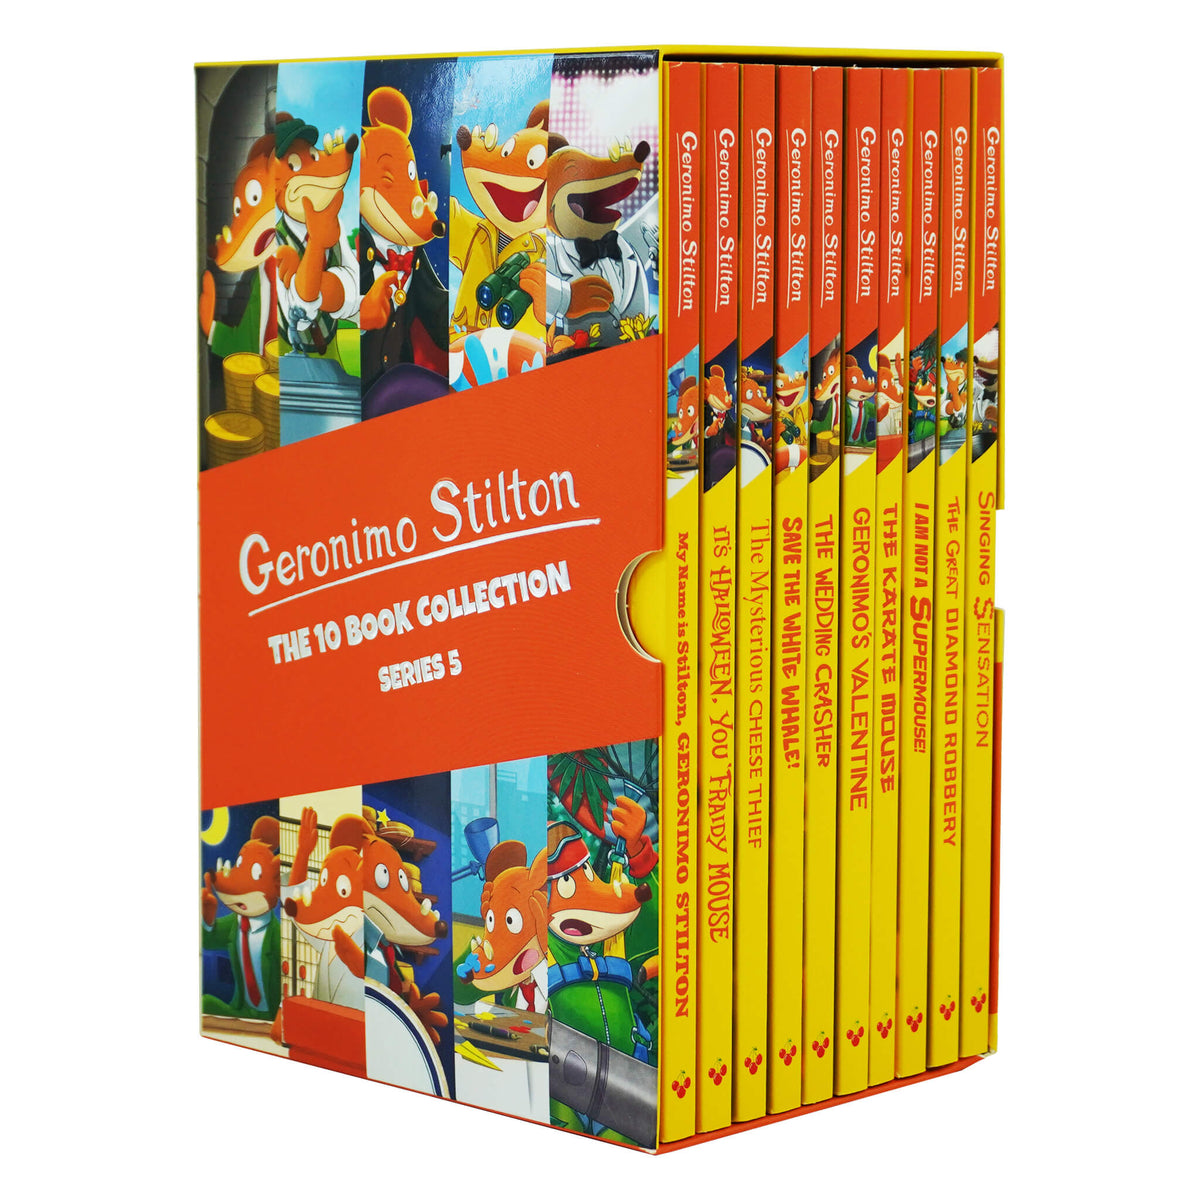 Geronimo Stilton The 10 Book Collection (Series 5) Box Set - Ages